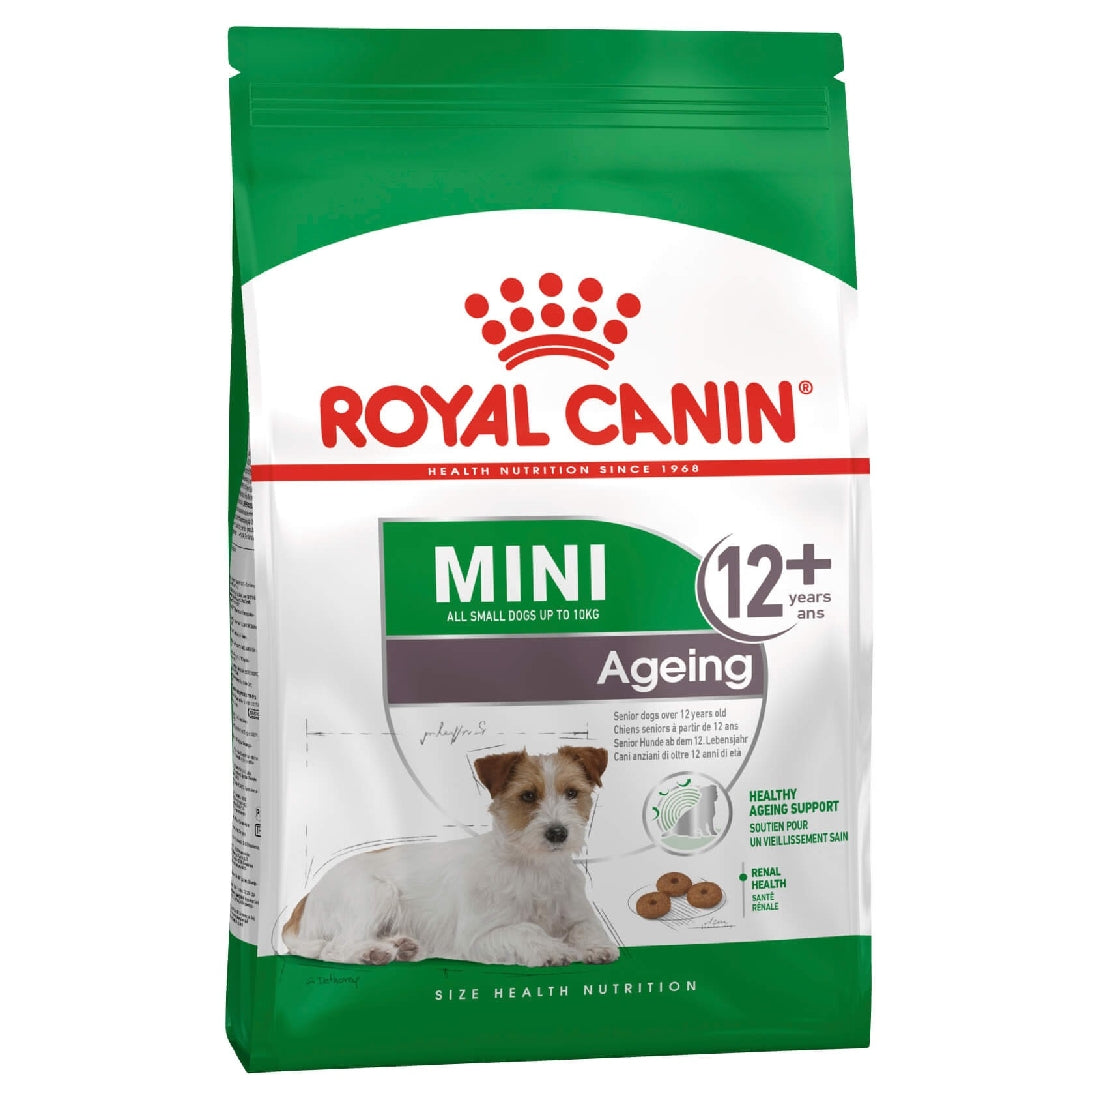 Royal Canin Mini Age +12 1.5kg